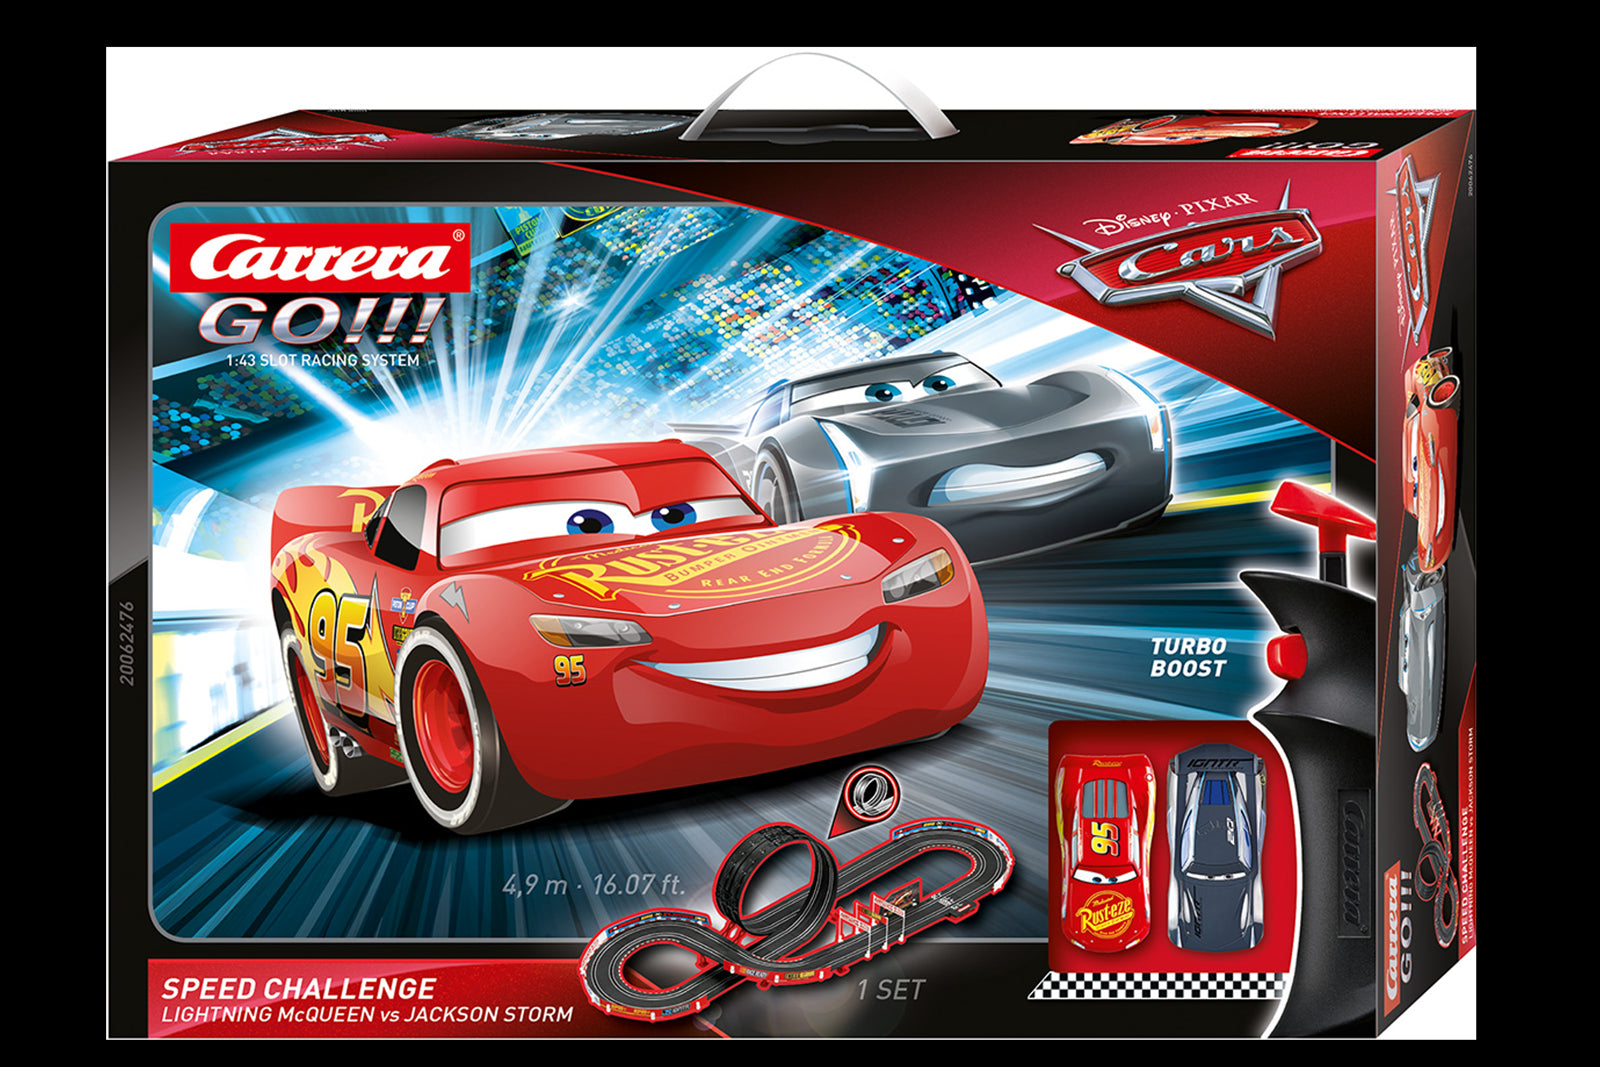 Circuit électrique Hot Wheels 4,9m - Carrera GO!!! 2 voitures, loopin